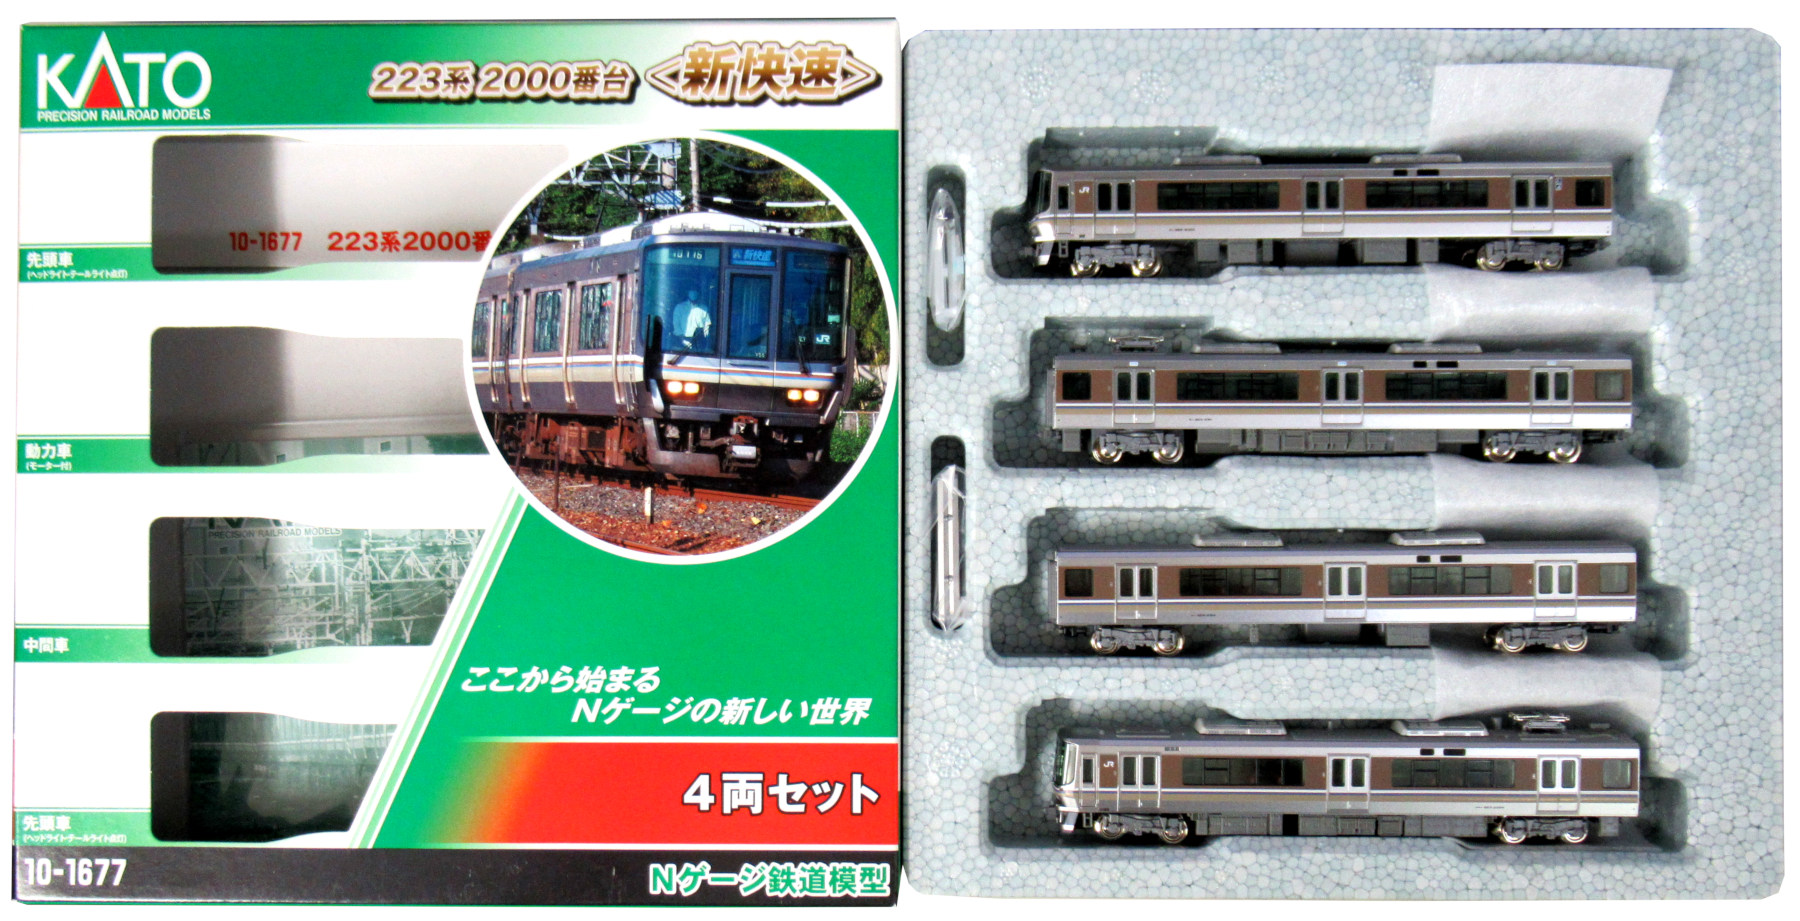 KATO Nゲージ 223系2000番台 新快速 4両セット 10-1677 鉄道模型 電車 ...